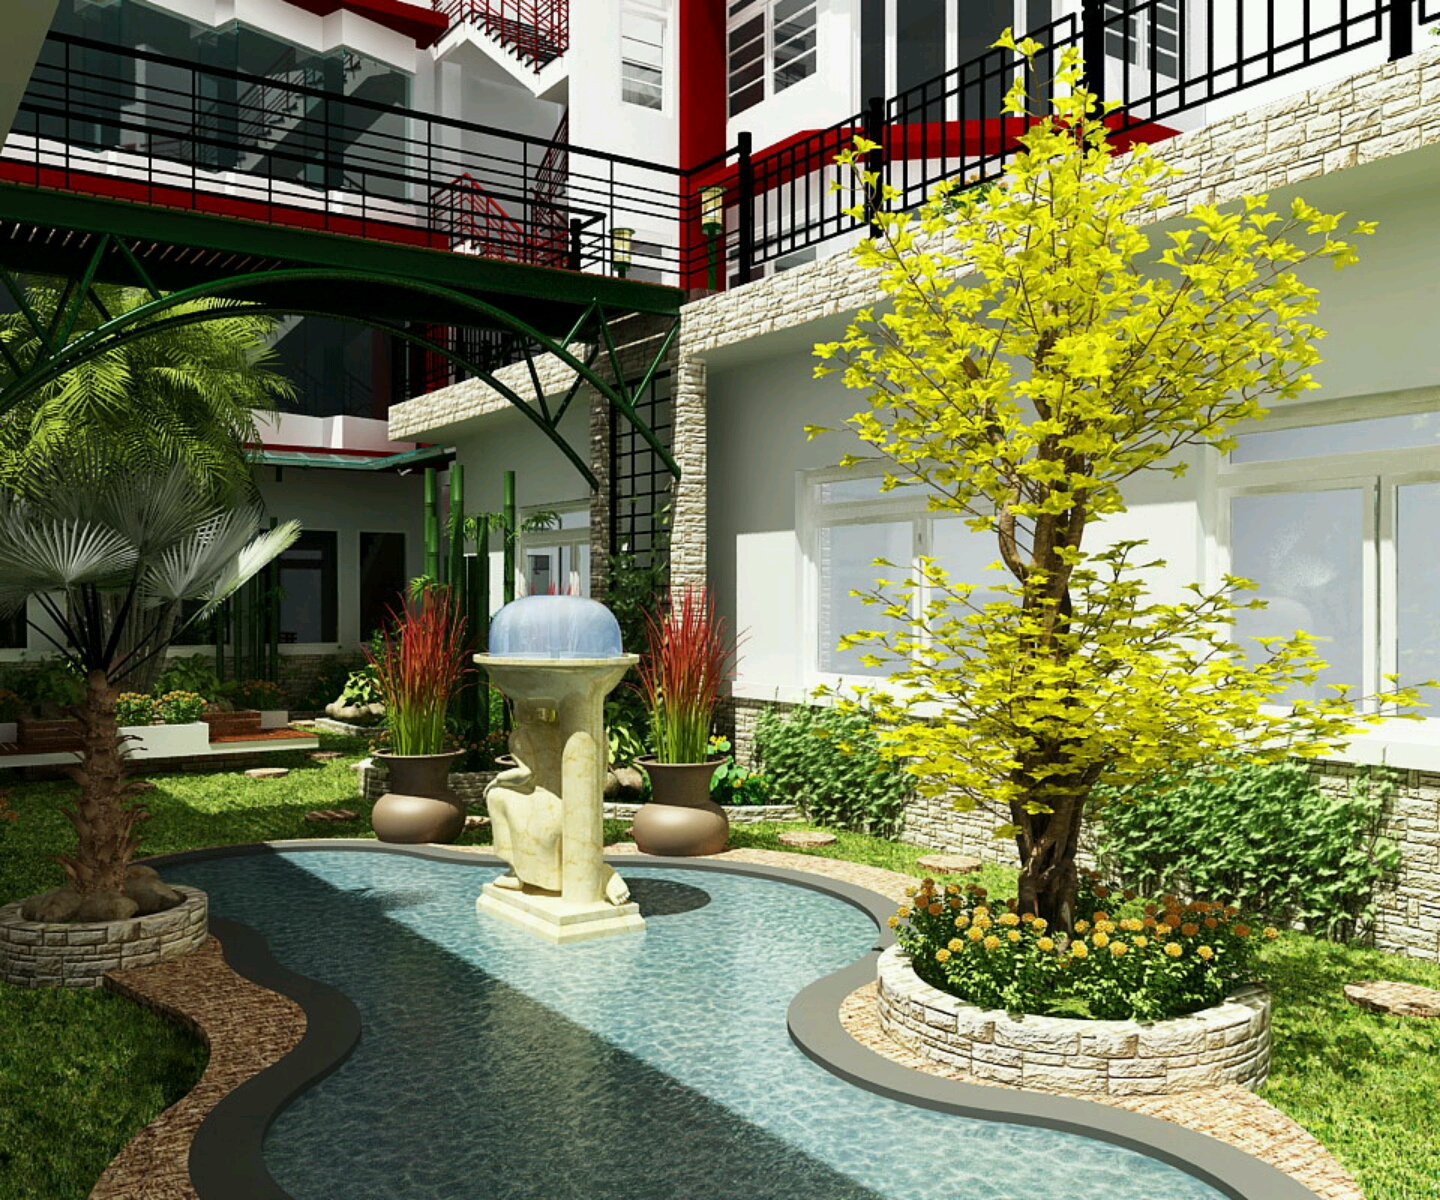 ... designs latest.: Modern luxury homes beautiful garden designs ideas